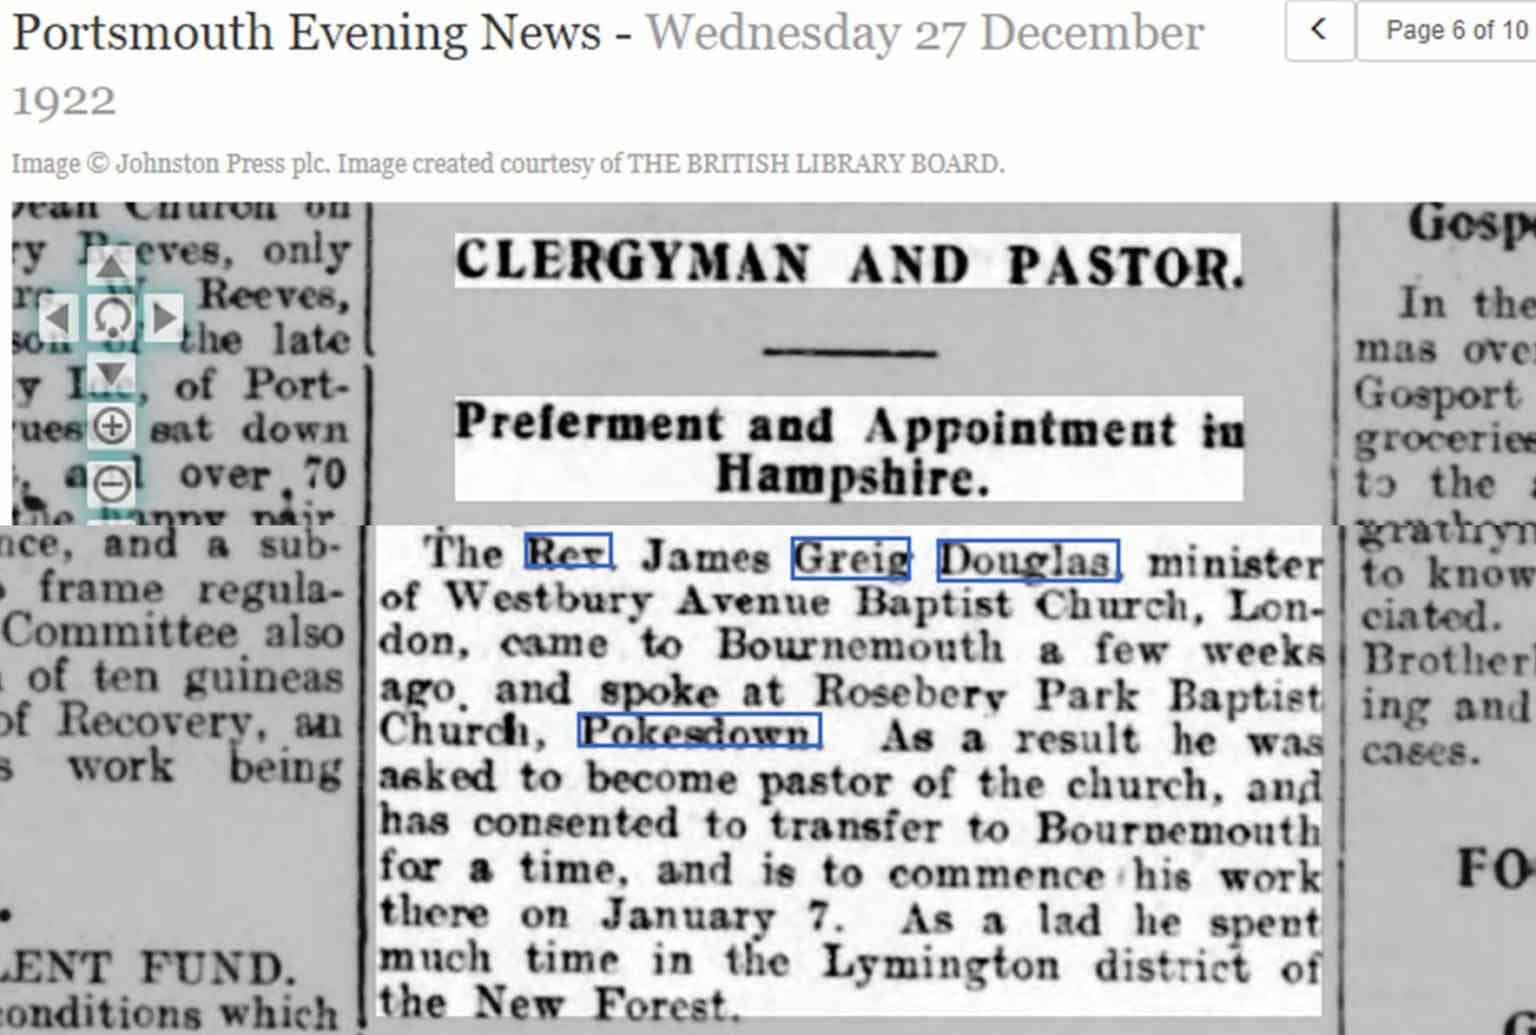 newspaper article about Rev Douglas starting at Rosebery Park Baptist Church